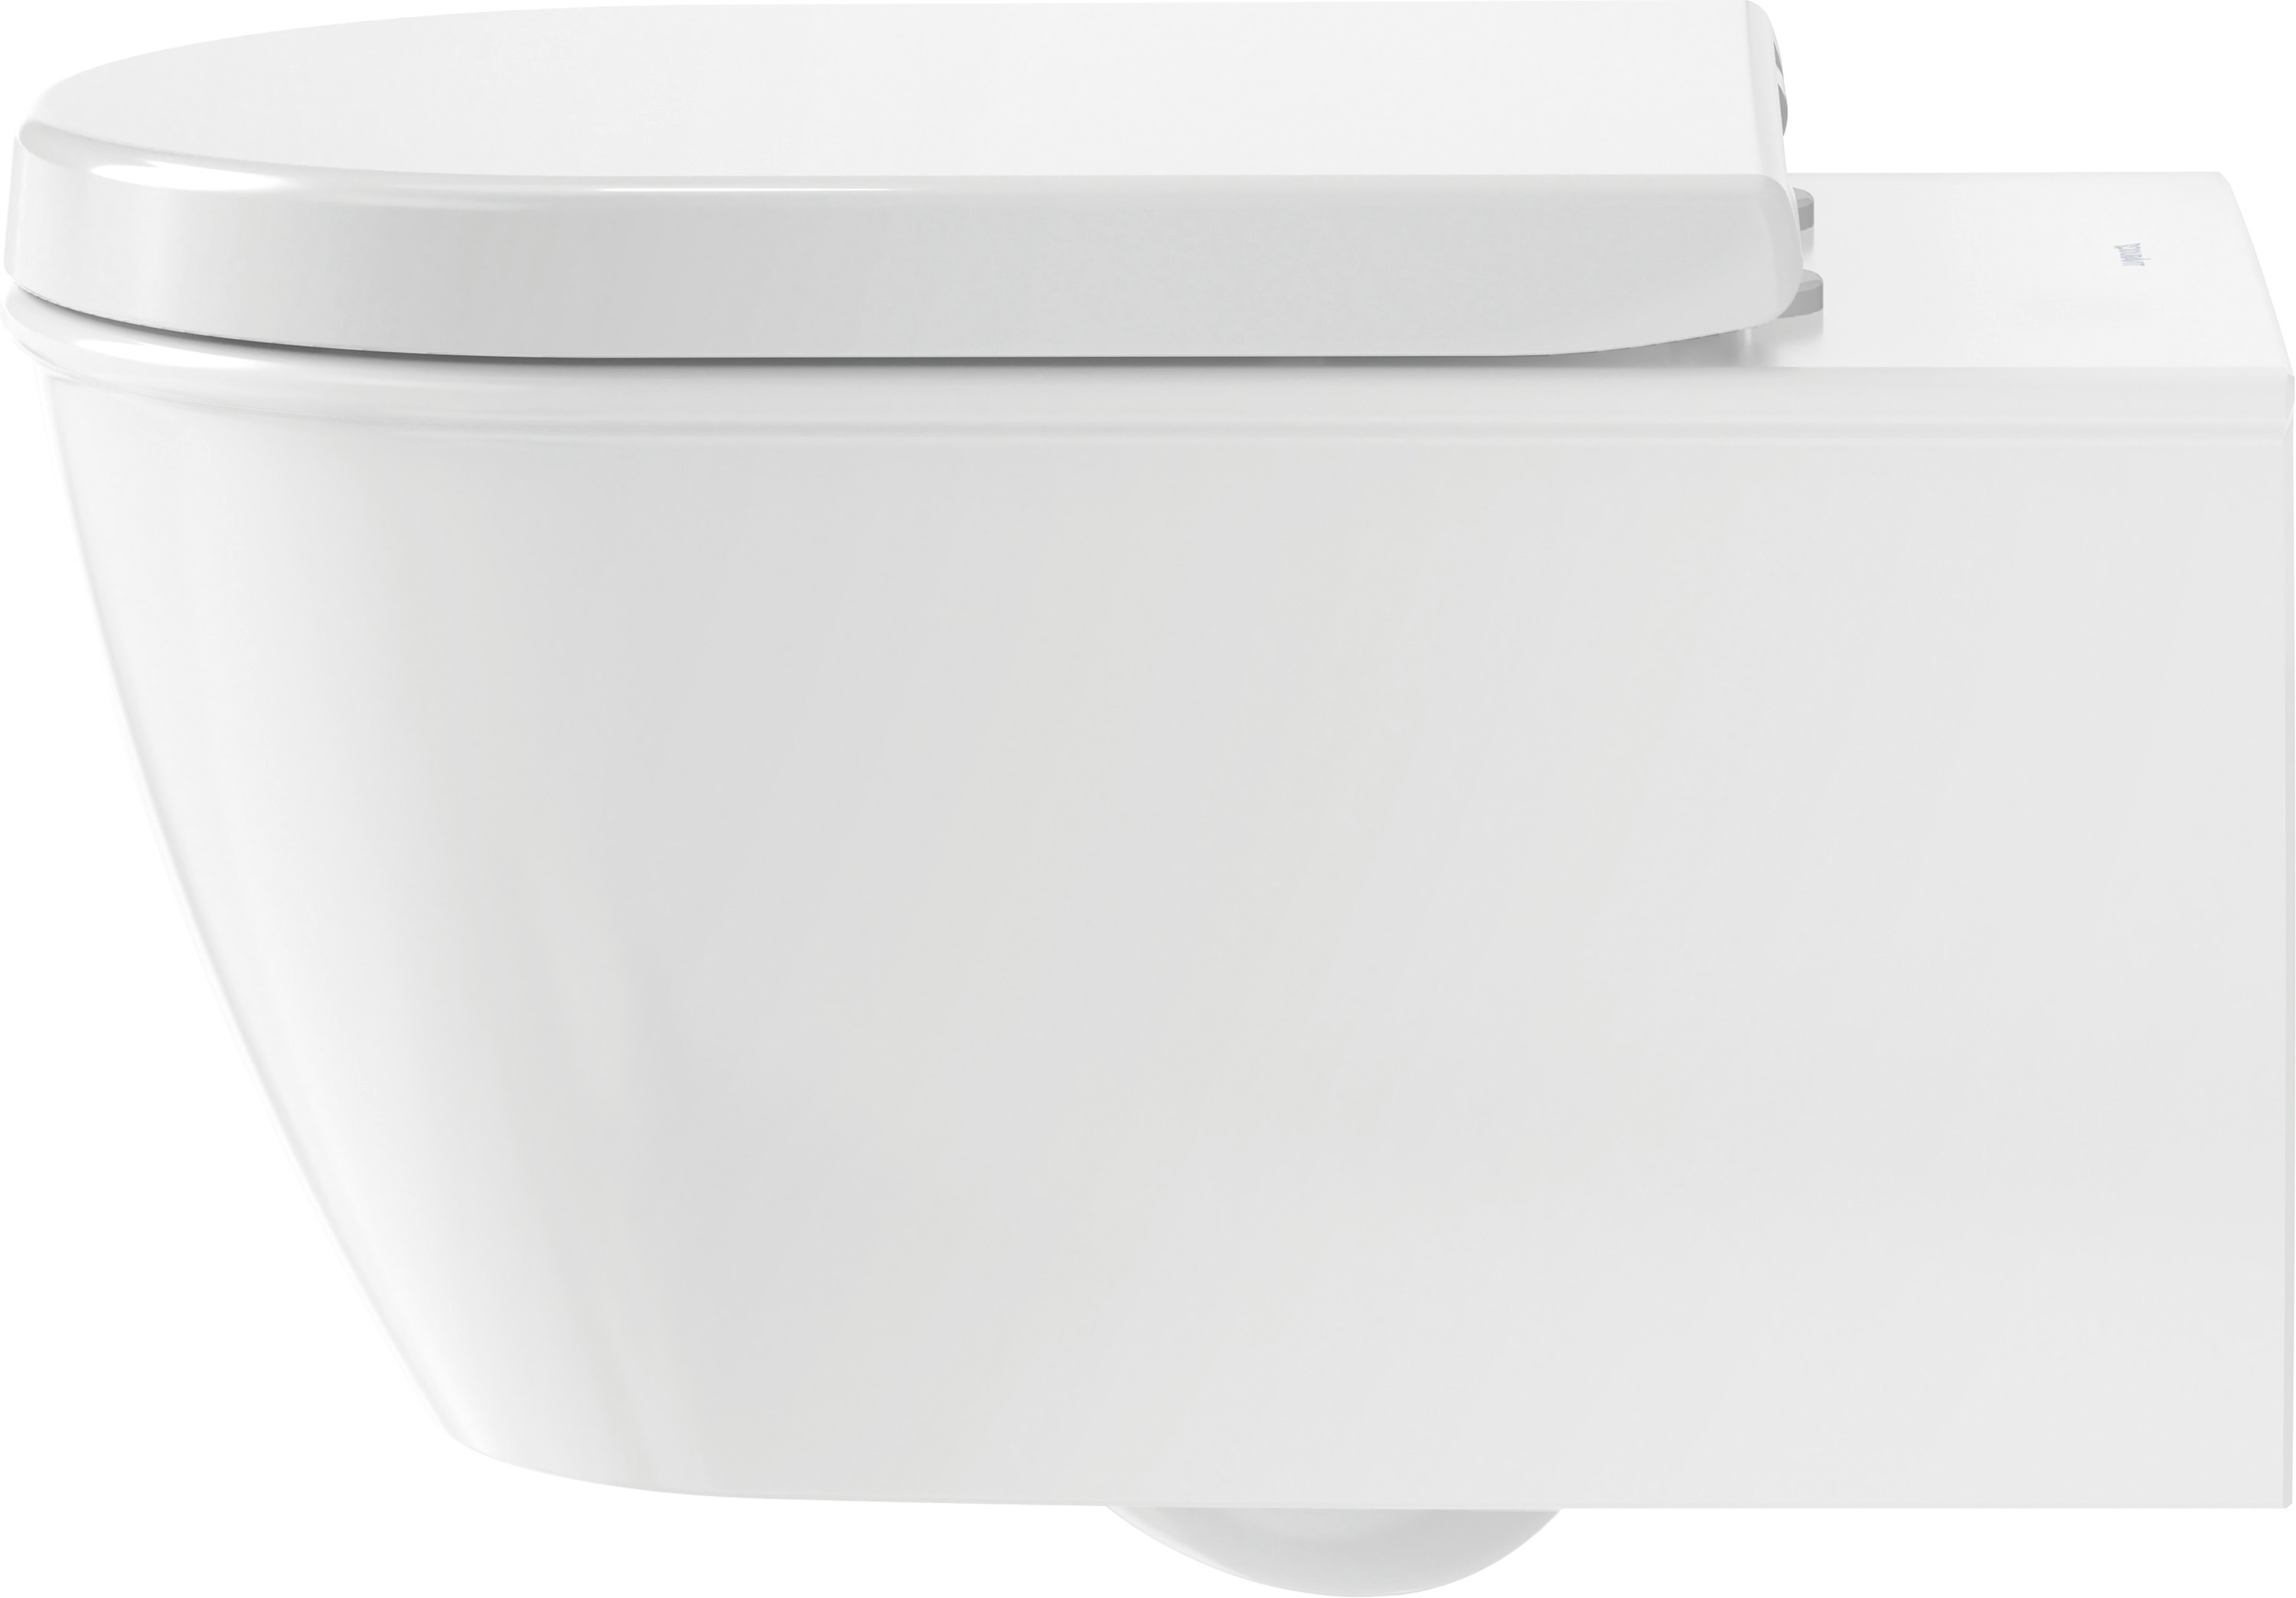 Wand-WC Darling New 620 mm Tiefspüler, Durafix, weiß, HYG